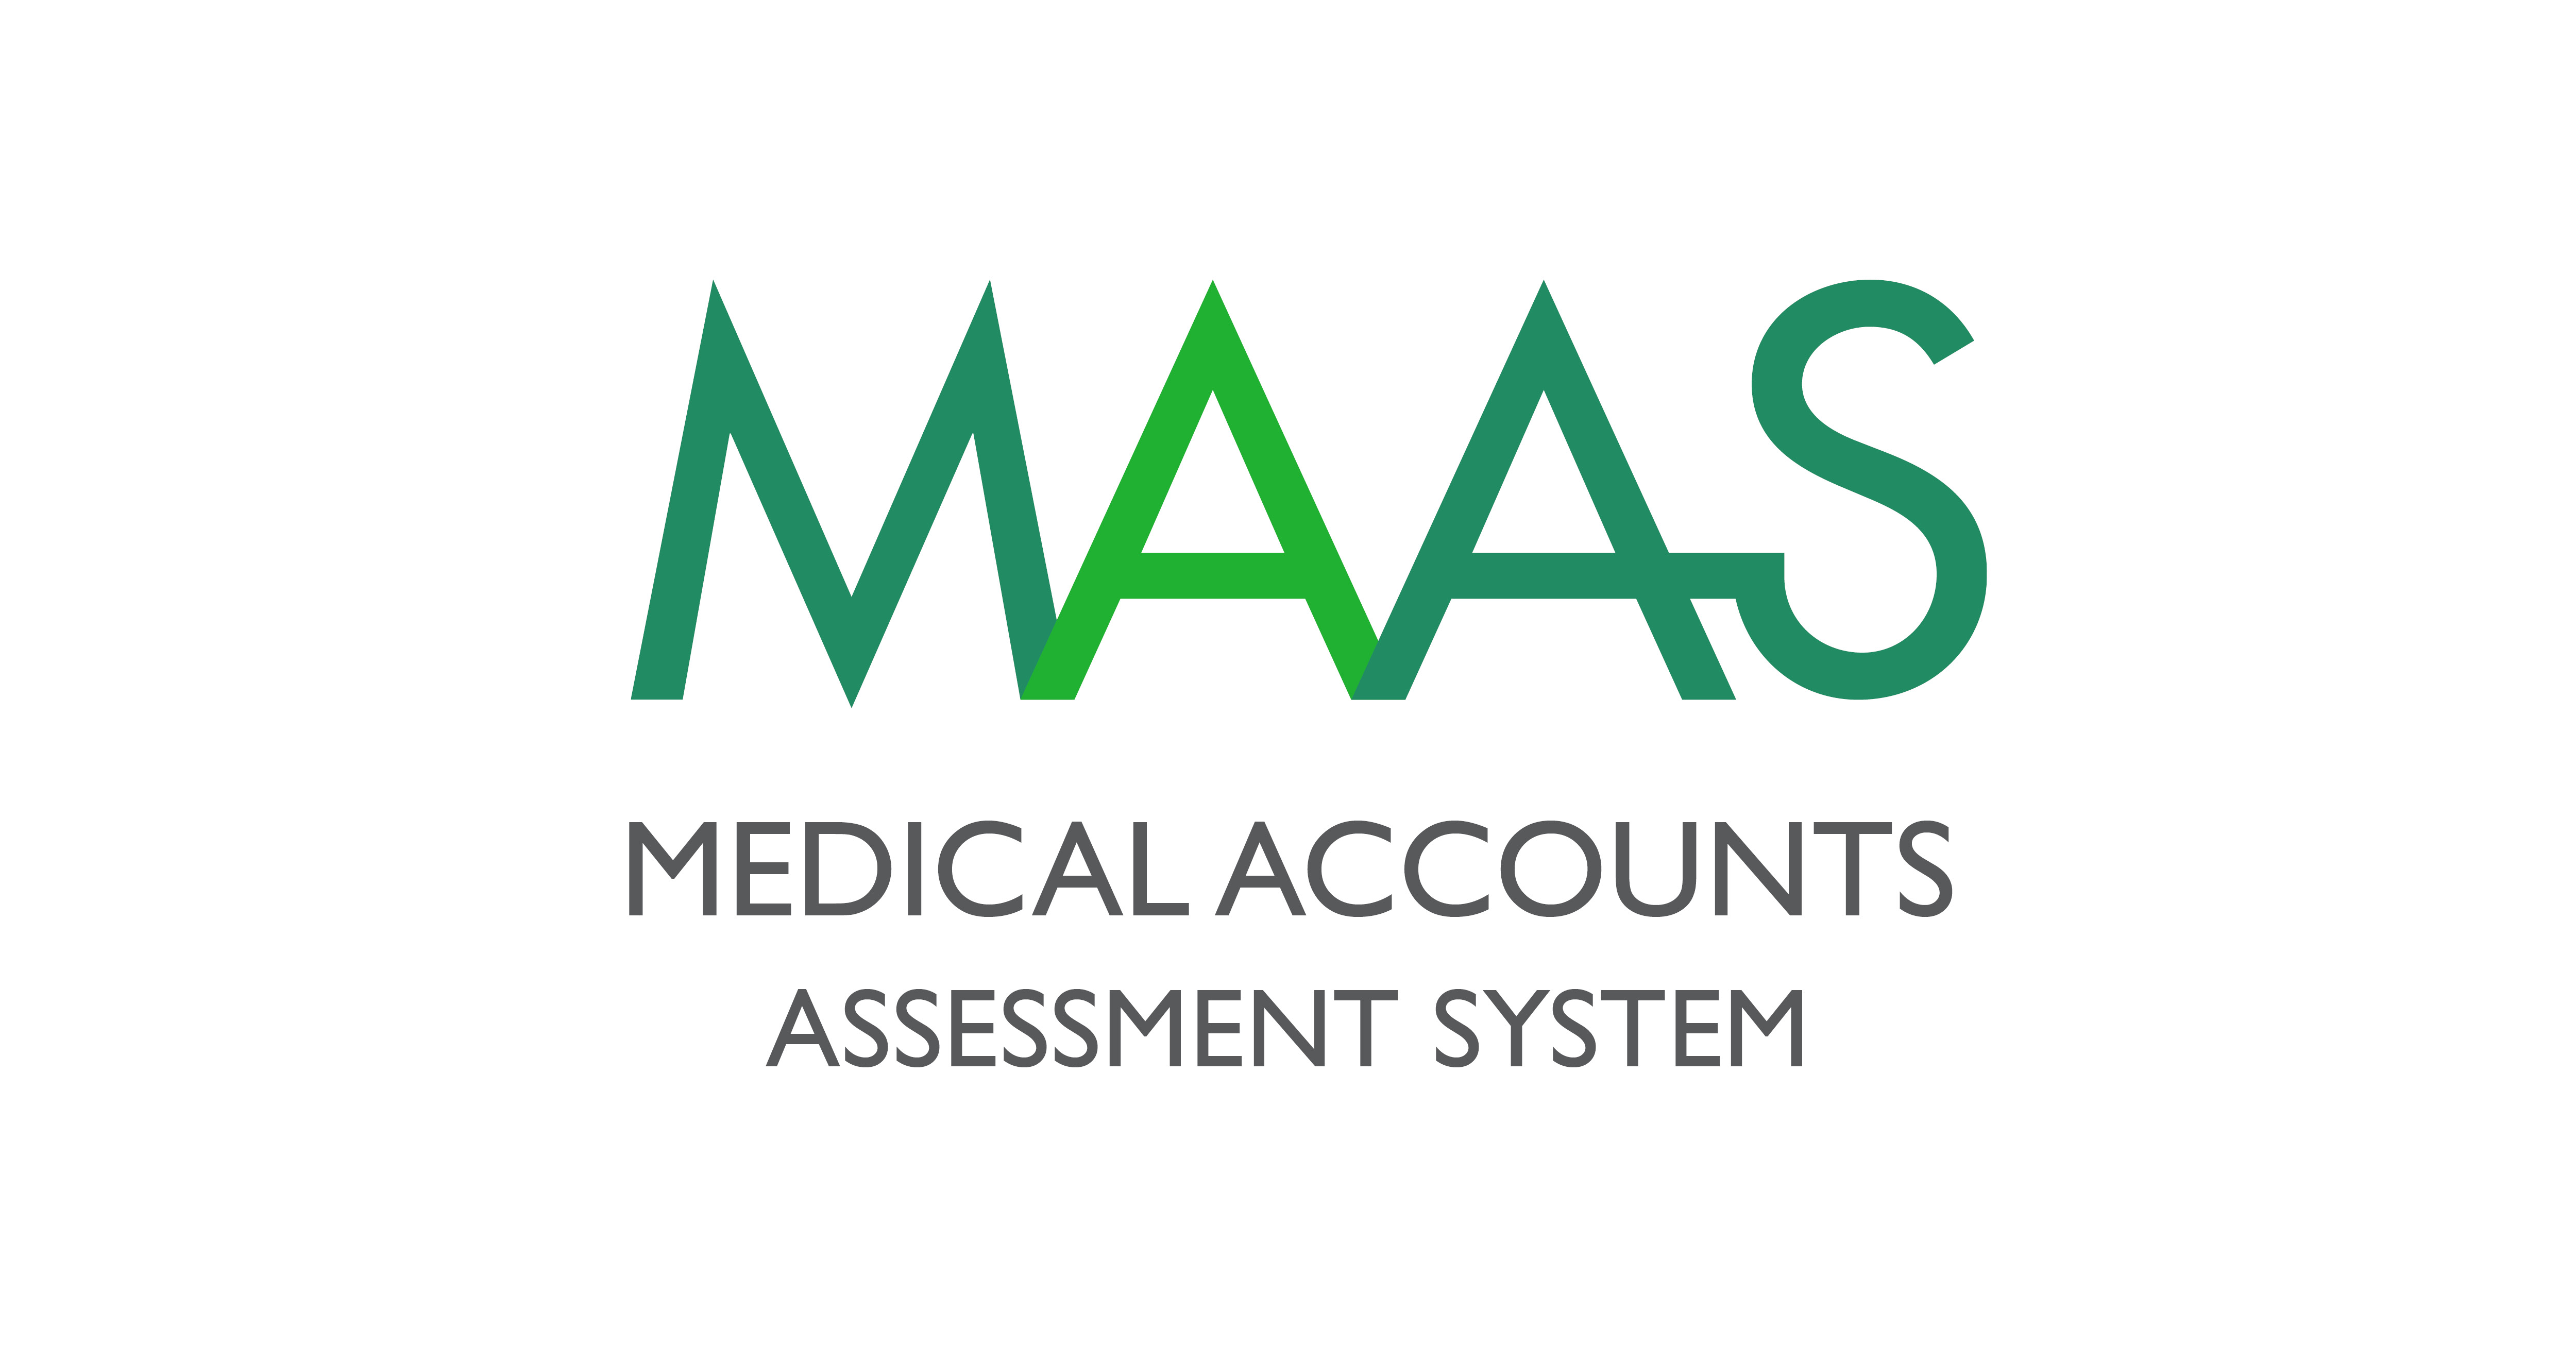 MAAS - Medical Accounts Assessment System logo